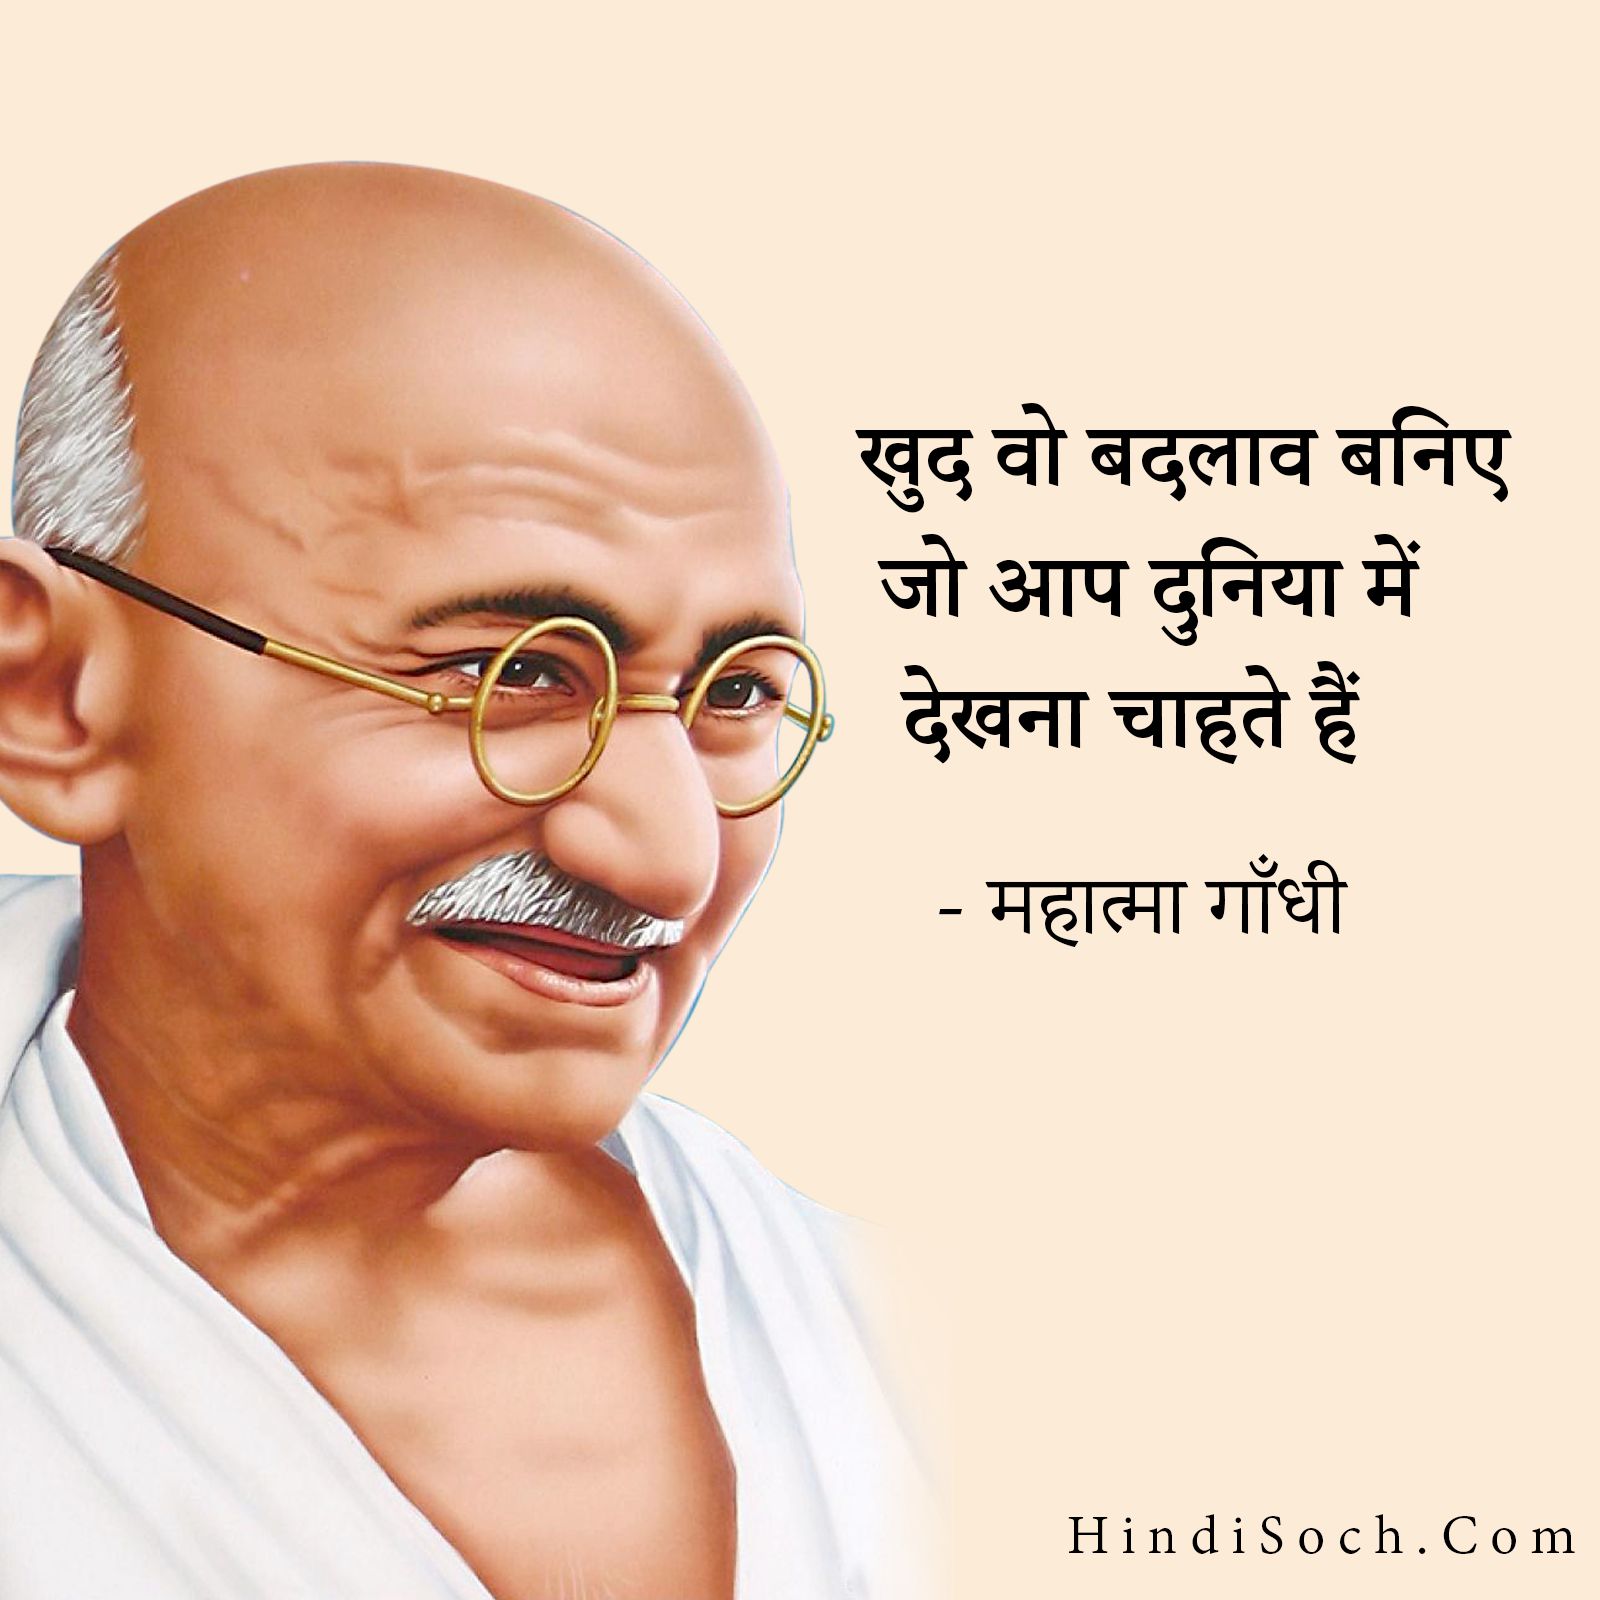 महात्मा गांधी के विचार, Mahatma Gandhi Quotes In Hindi, Quotes Of Mahatma Gandhi In Hindi